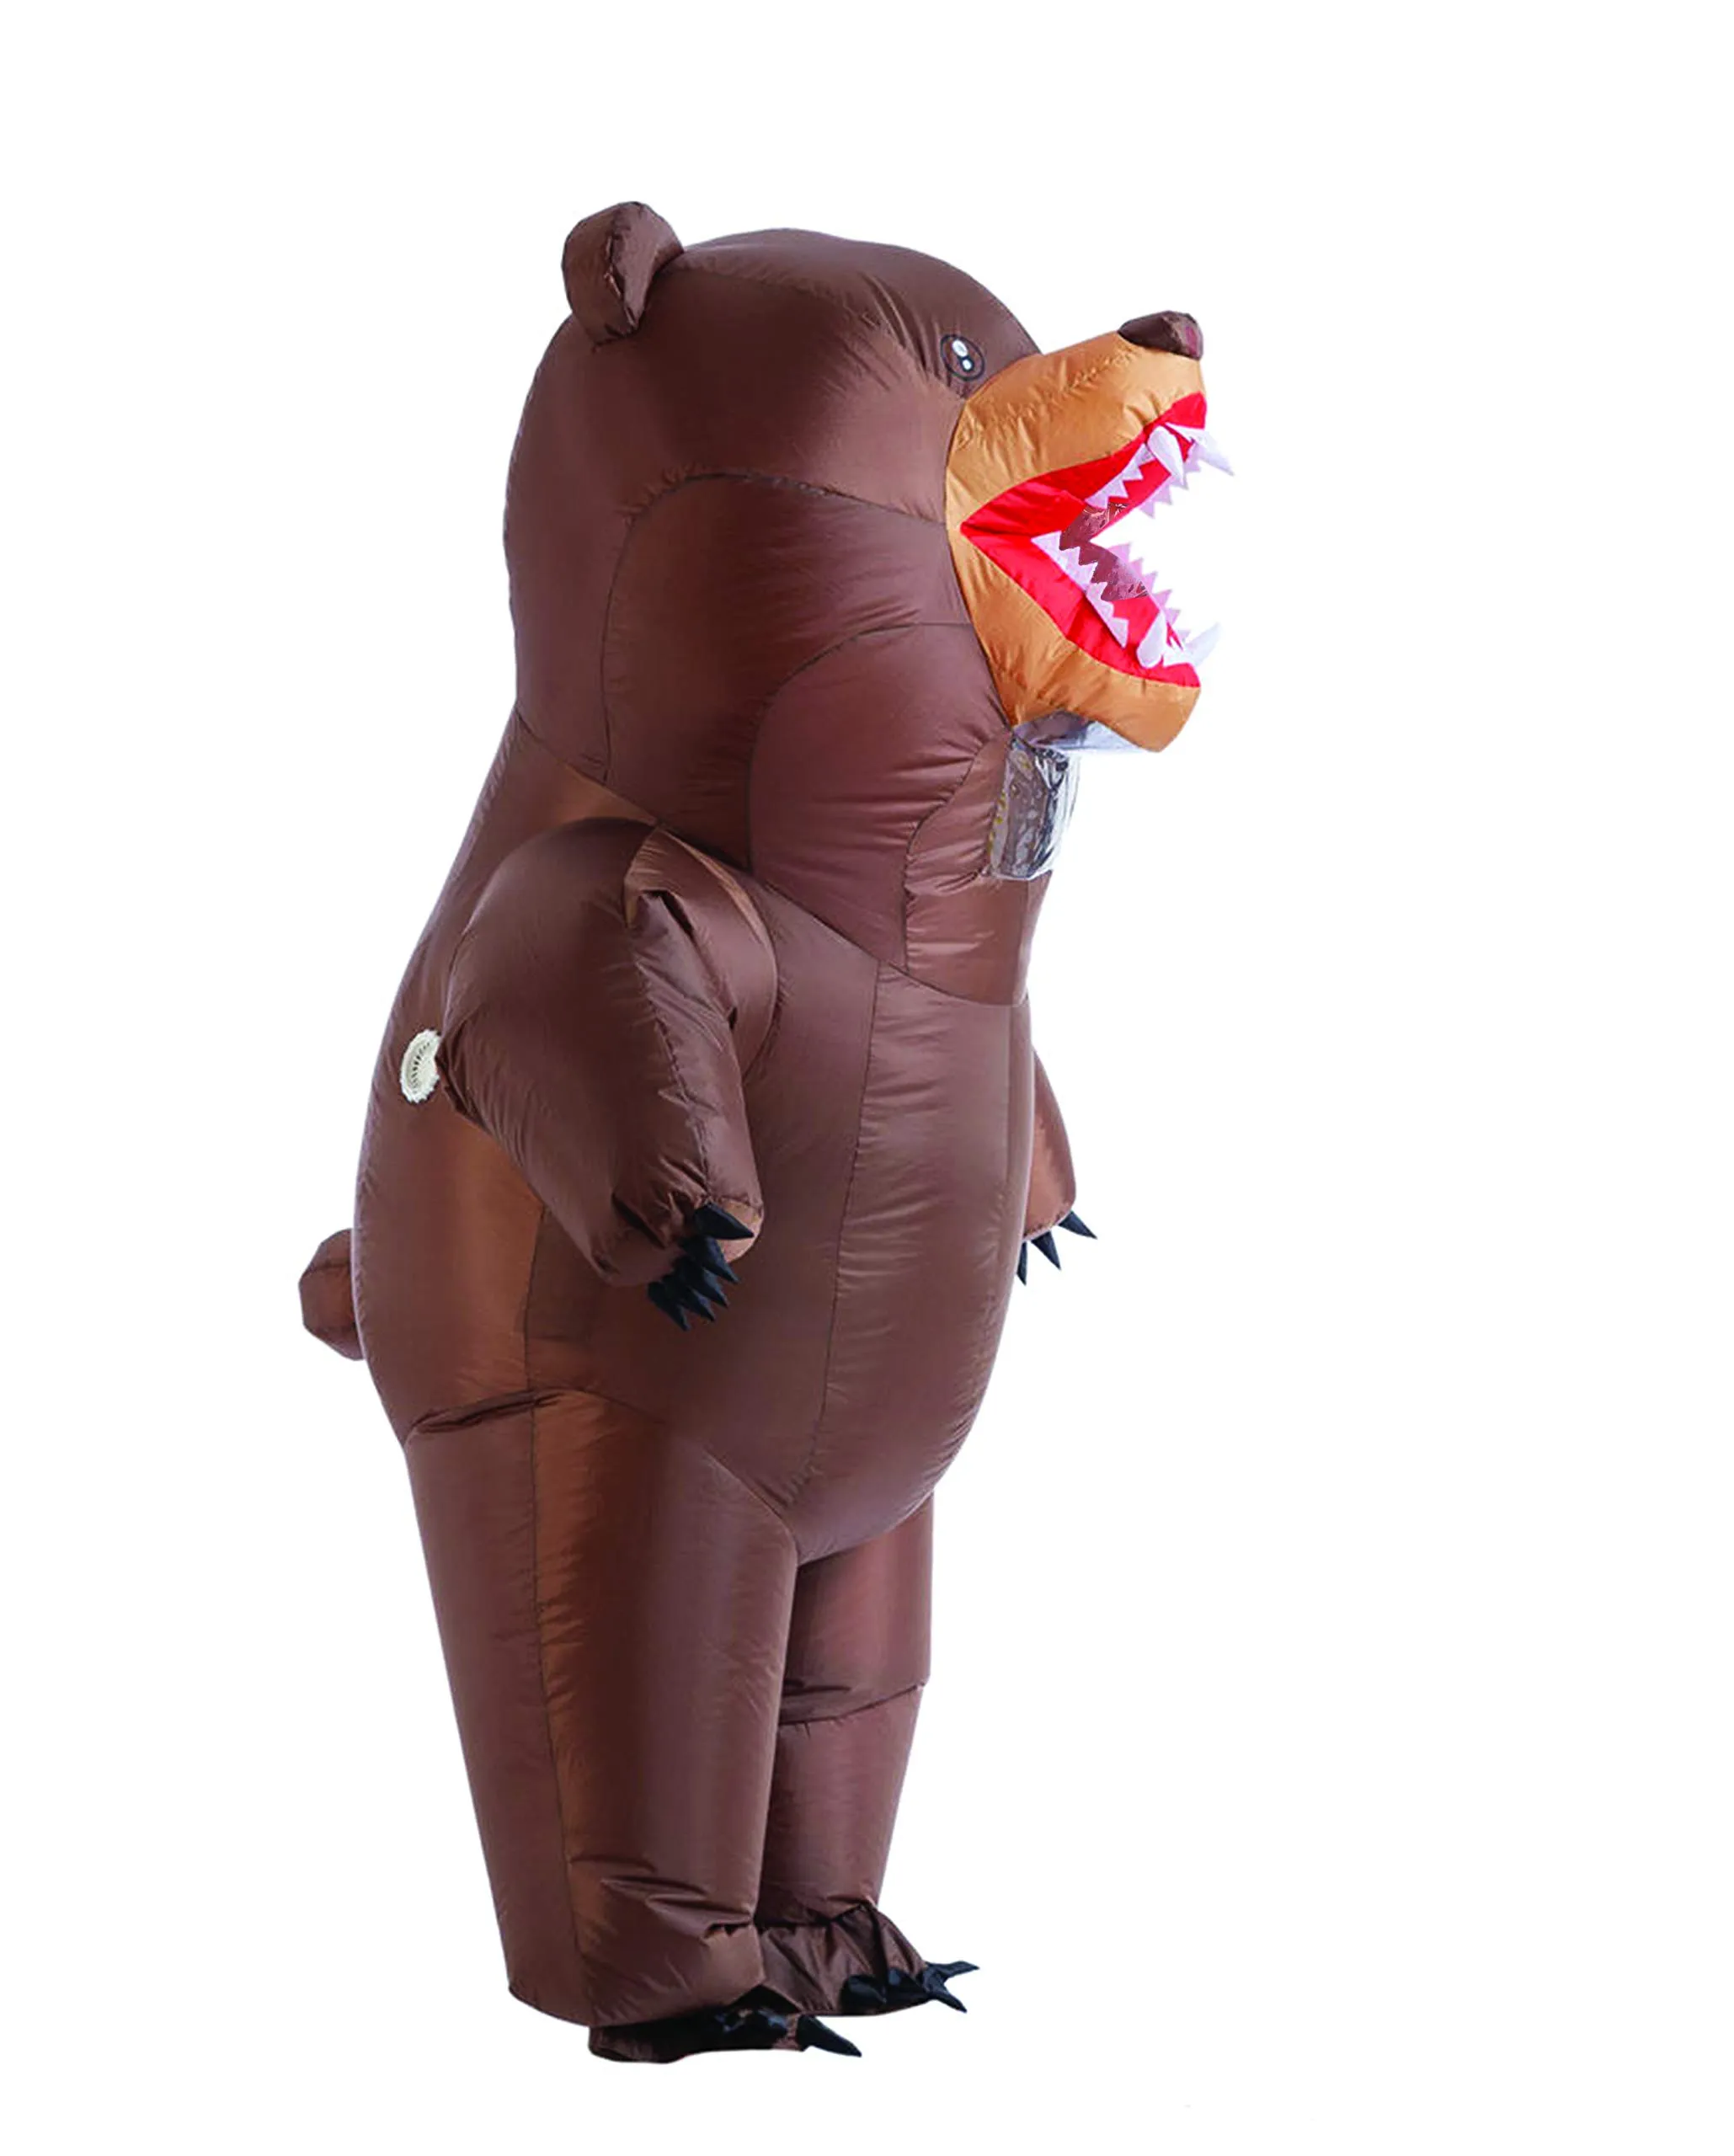 bear halloween costume